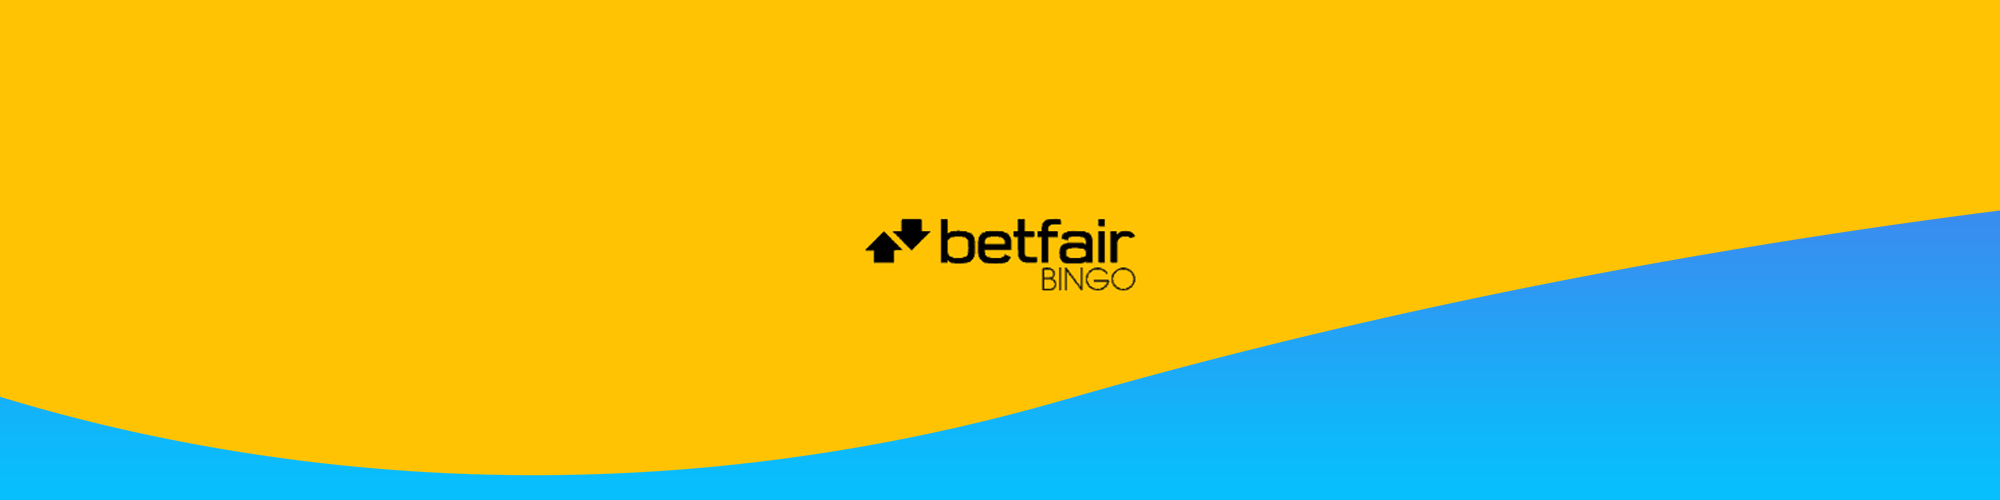 Betfair Bingo Alternative on EazeGames